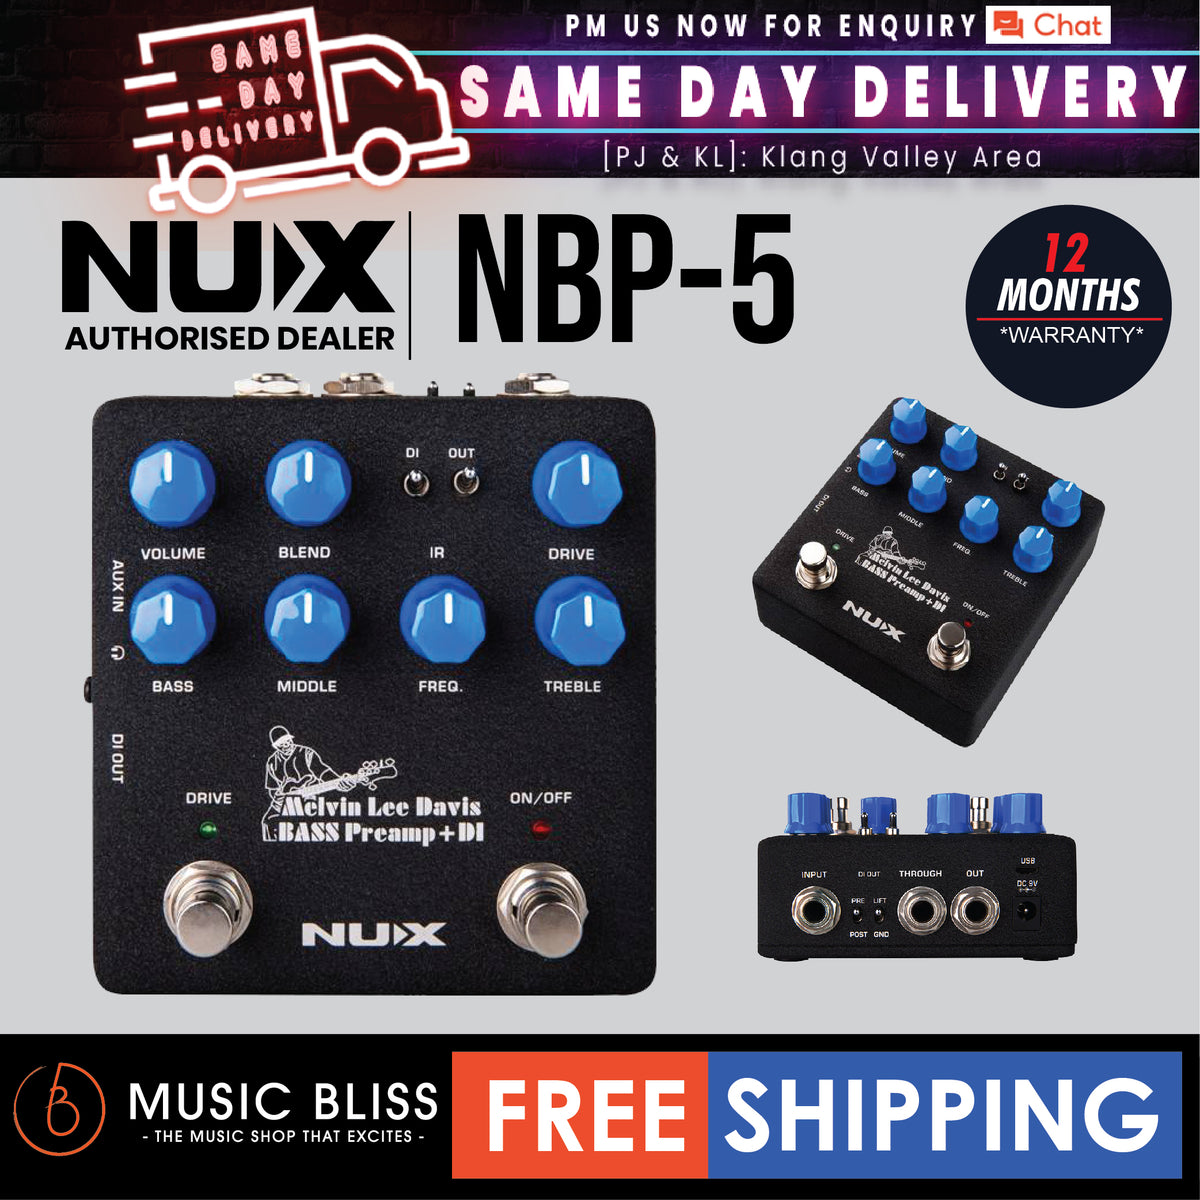 NUX NBP-5 Melvin Lee Davis Bass Preamp + DI | Music Bliss Malaysia